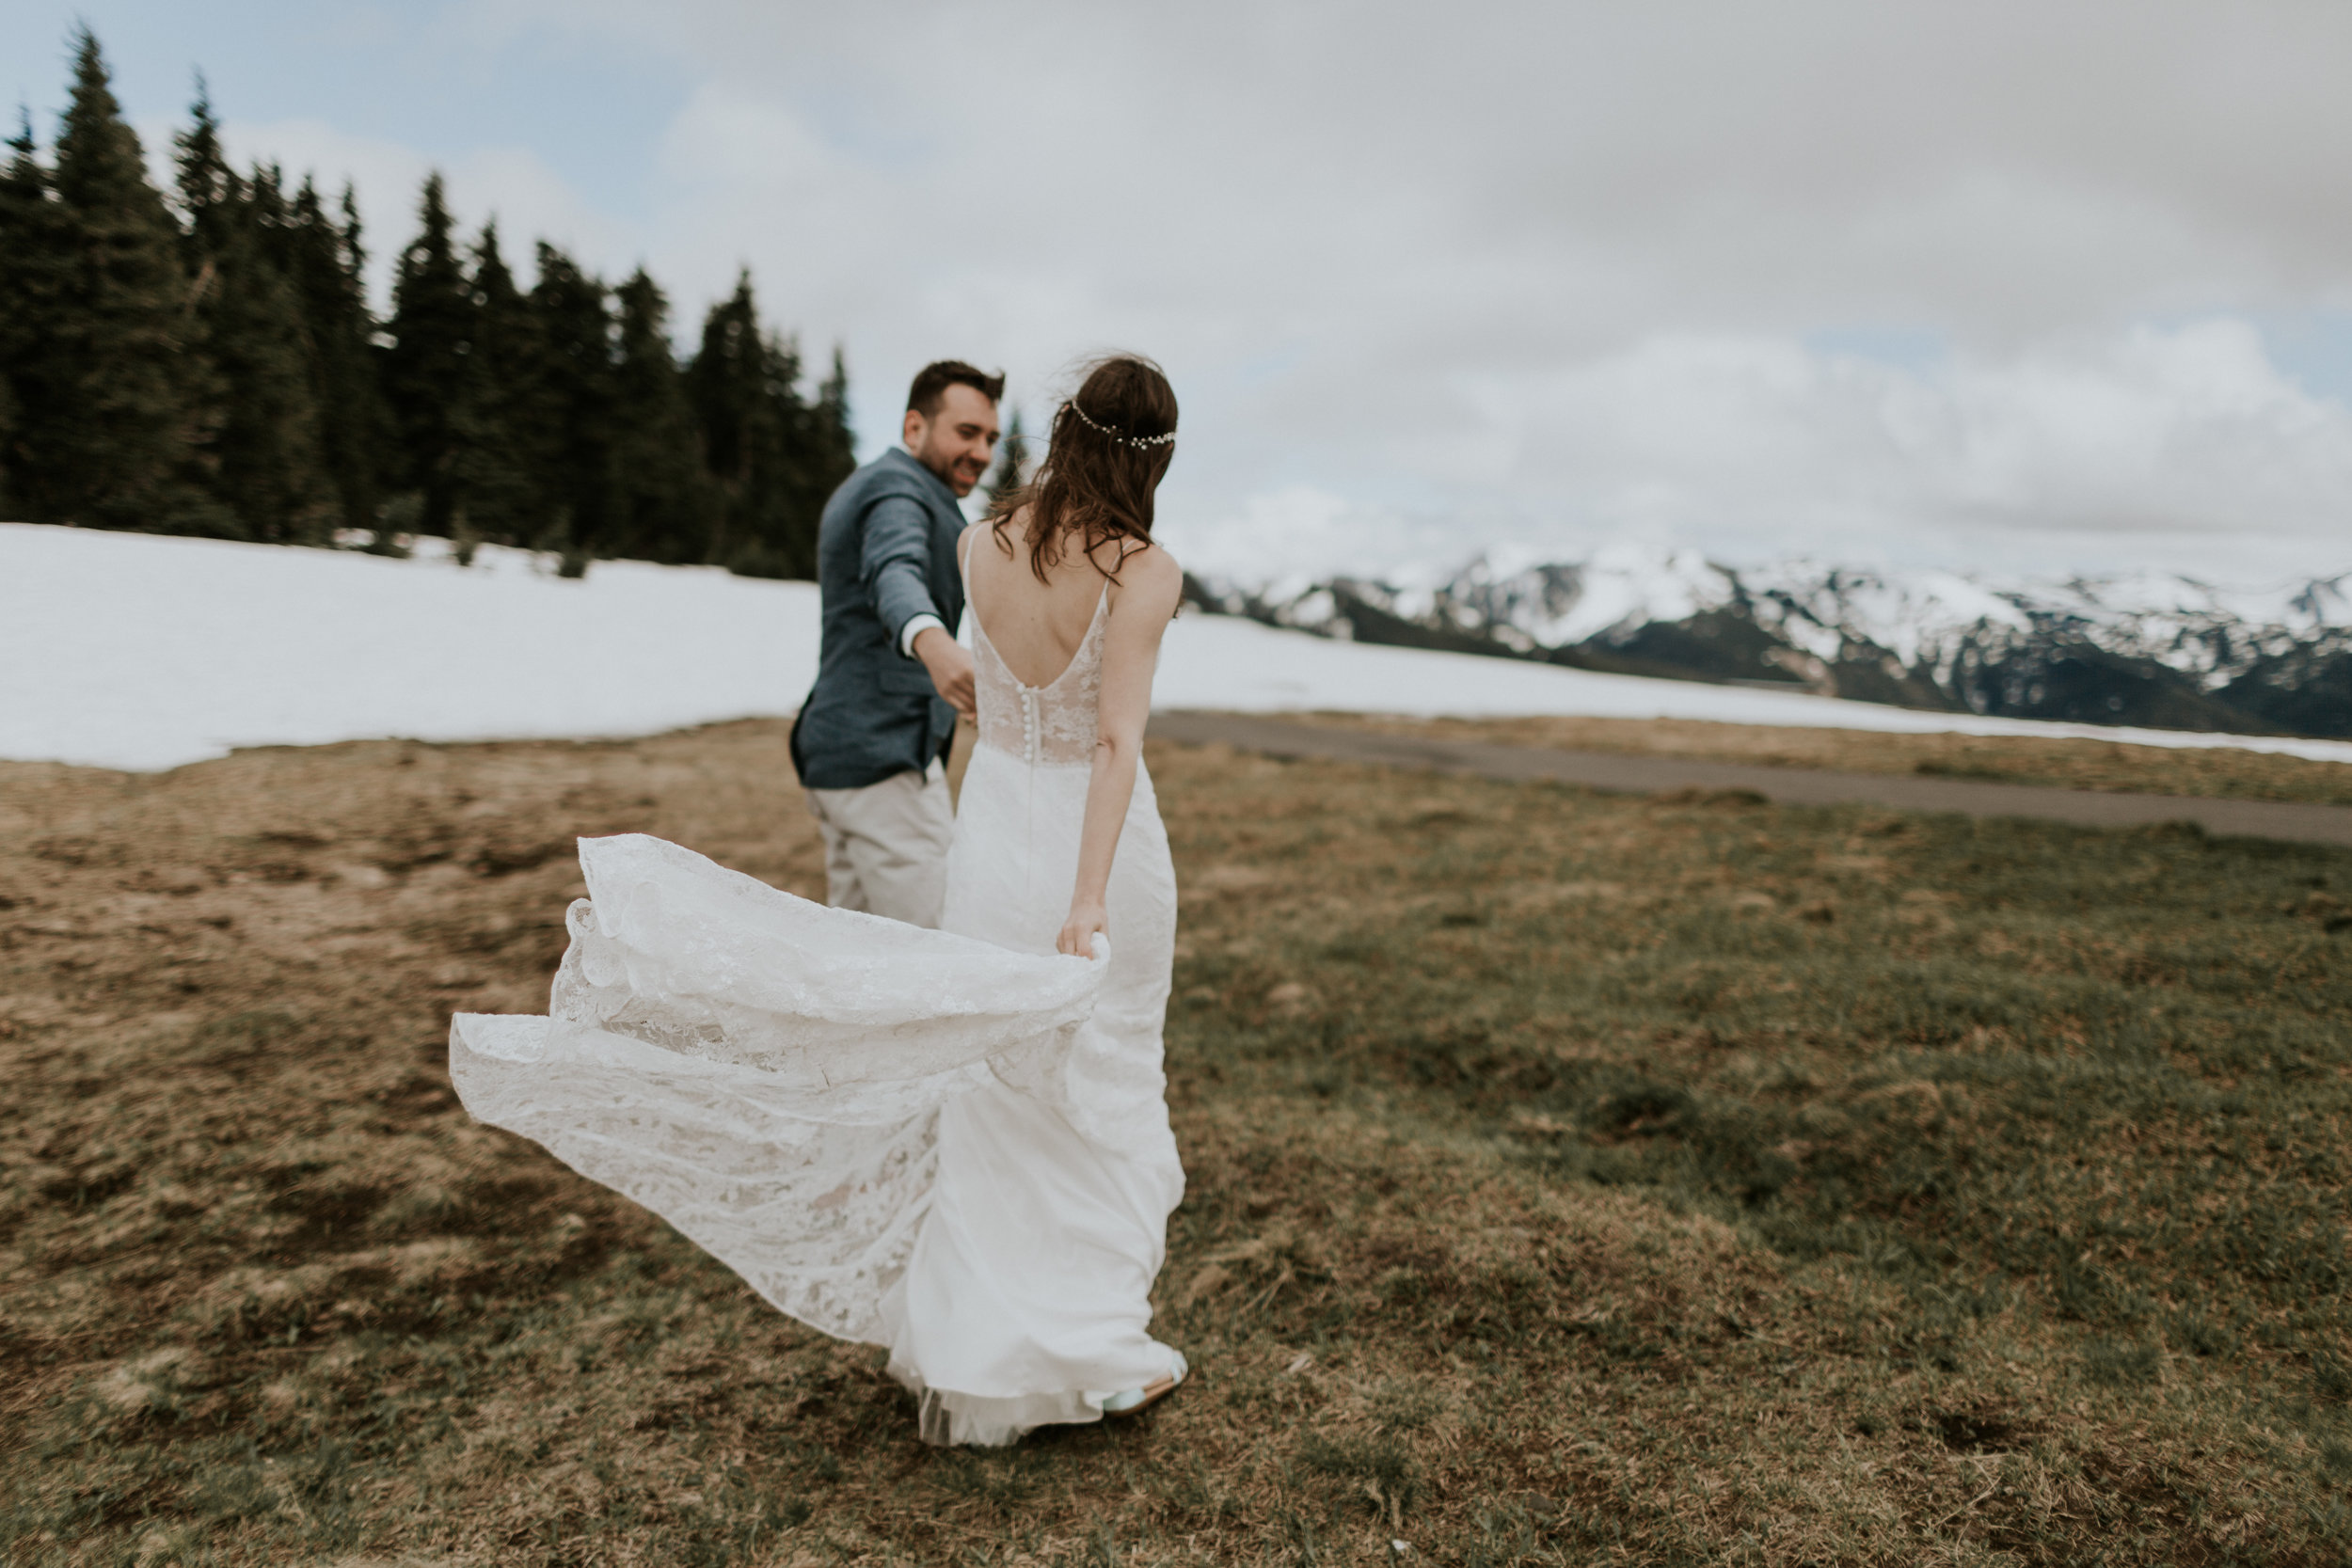 PNW-elopement-wedding-engagement-olympic national park-port angeles-hurricane ridge-lake crescent-kayla dawn photography- photographer-photography-kayladawnphoto-189.jpg